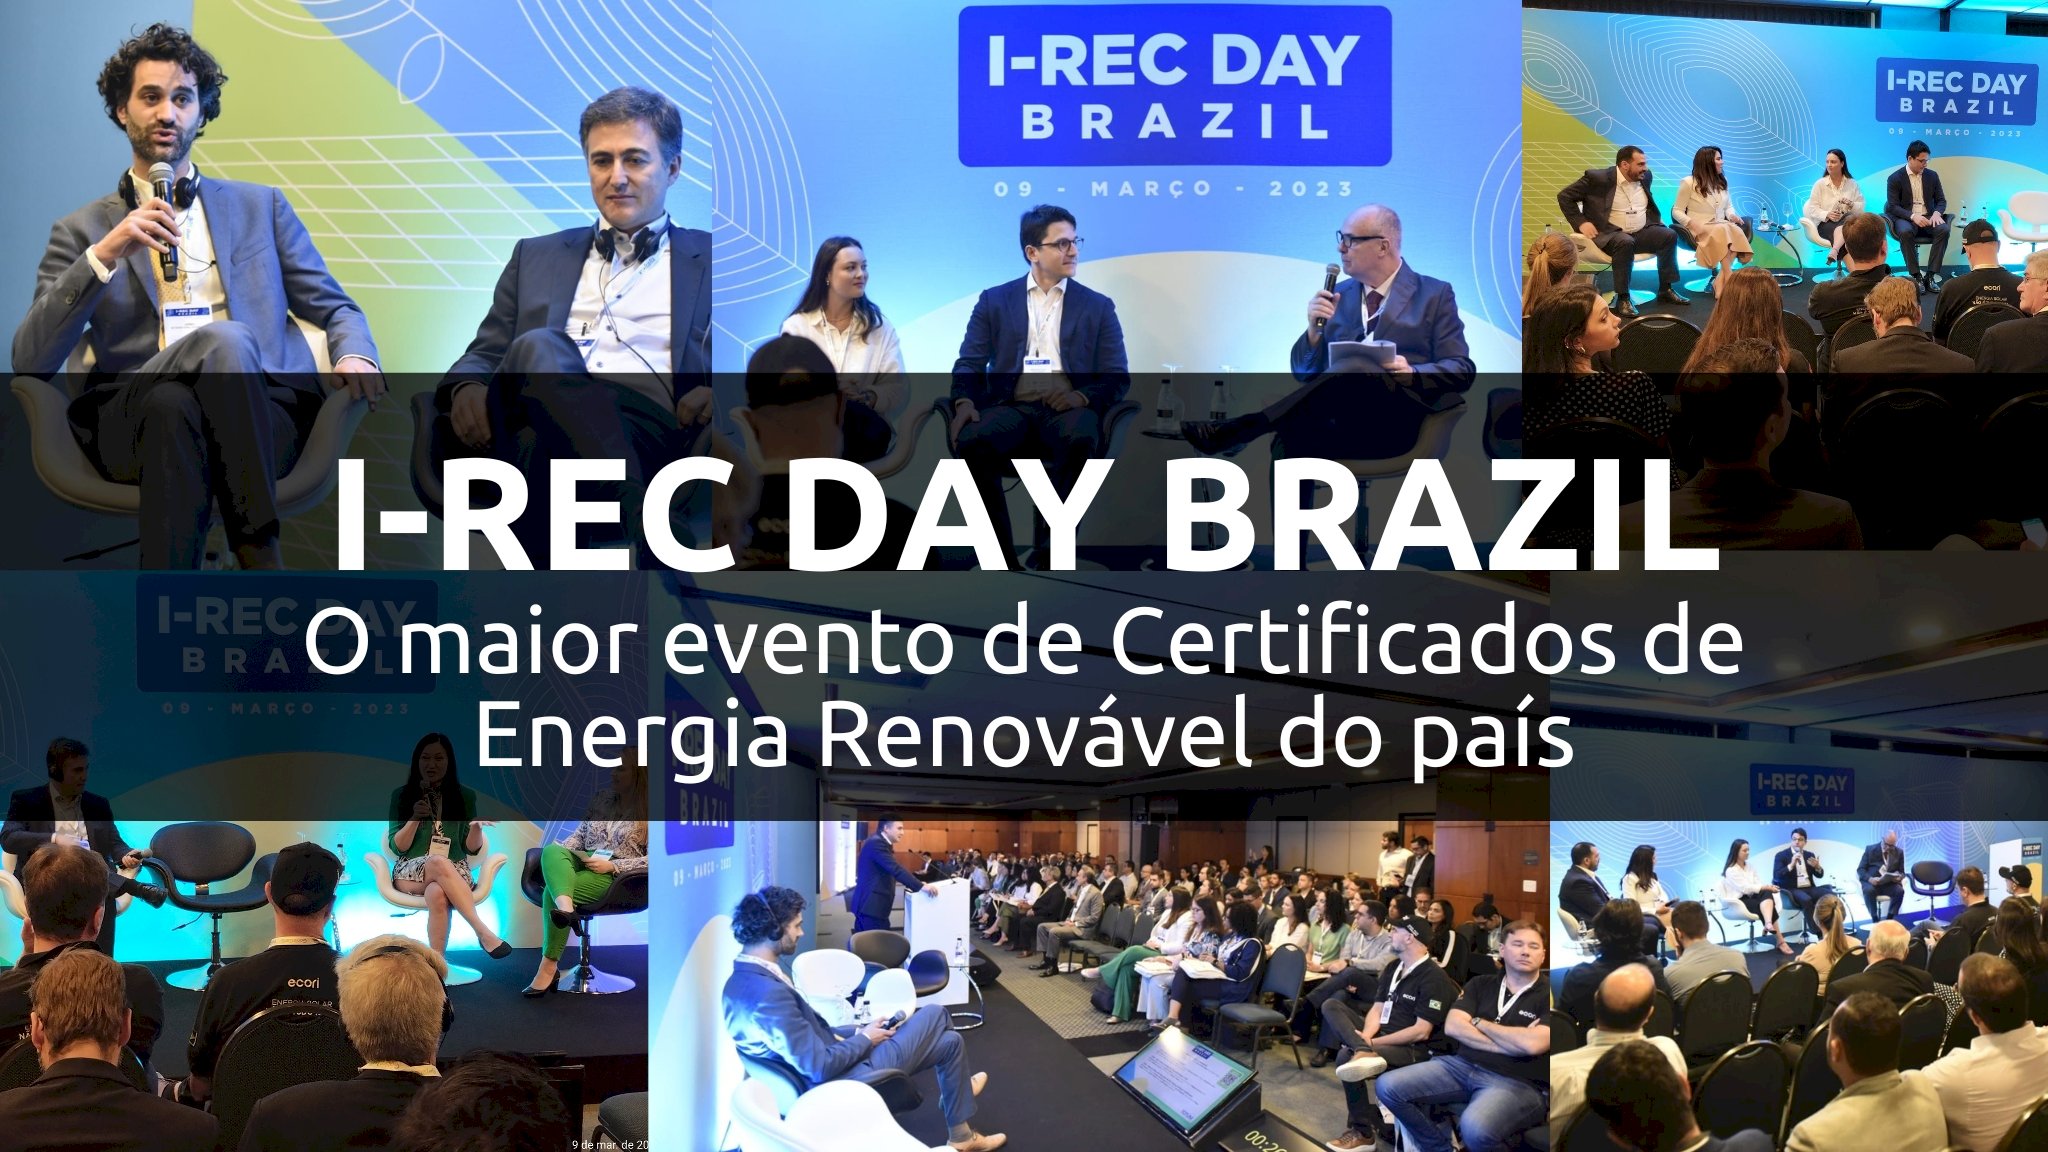 I-REC DAY BRAZIL